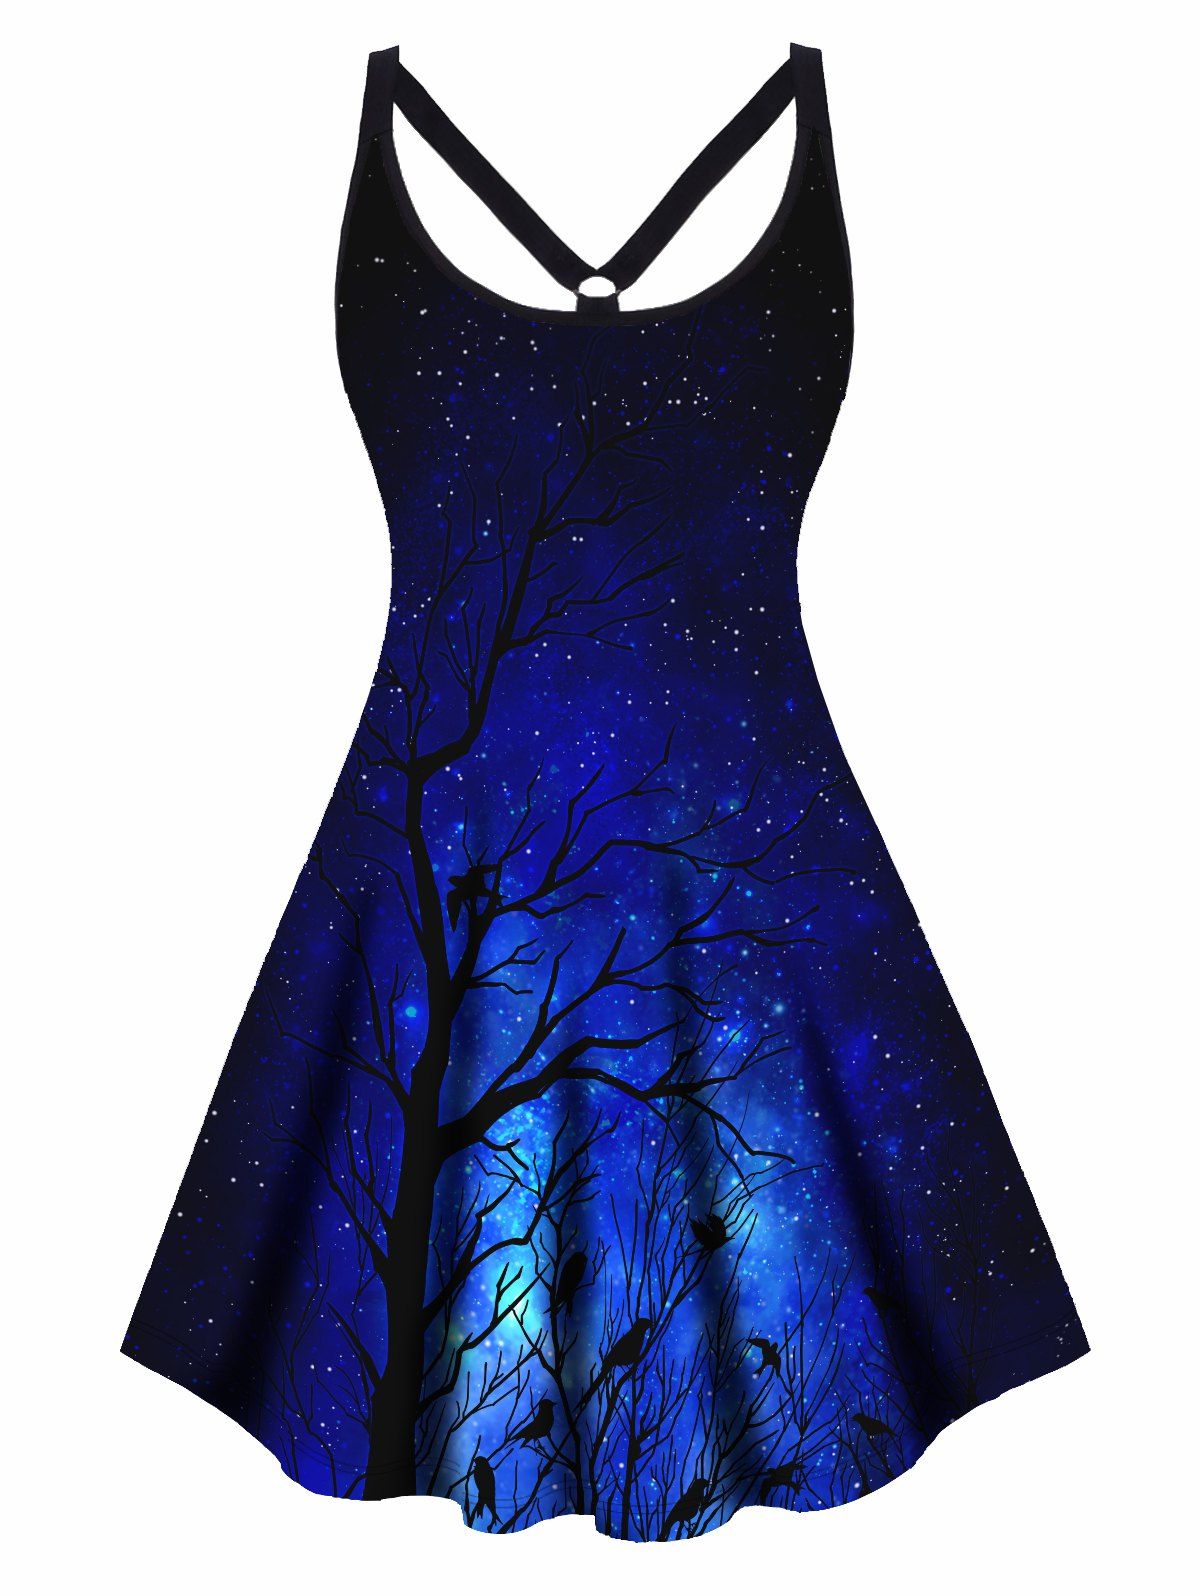 Plus Size Dress Galaxy Tree Branches Print Cut Out High Waisted A Line Mini Dress - BLACK 5X